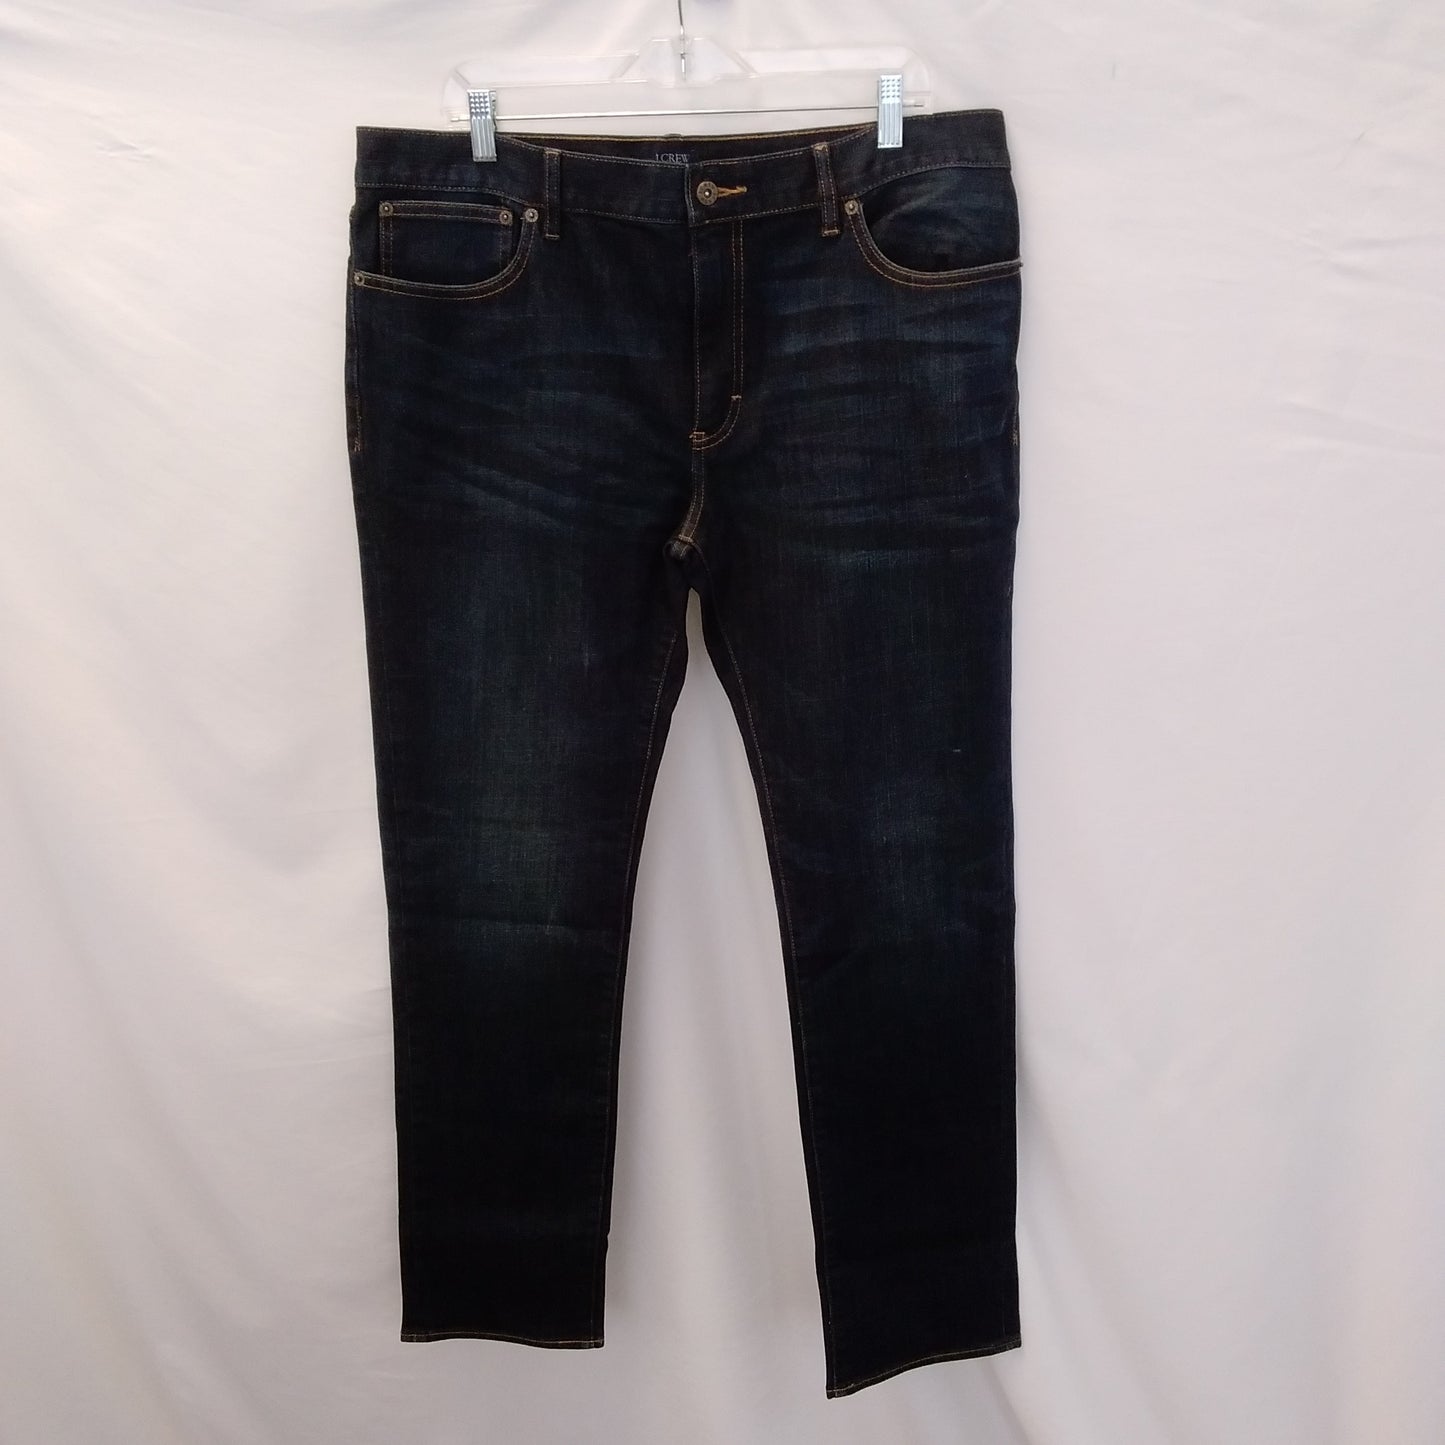 NWT - J. Crew Men’s Driggs Denim Blue Jeans - Size: 36x32